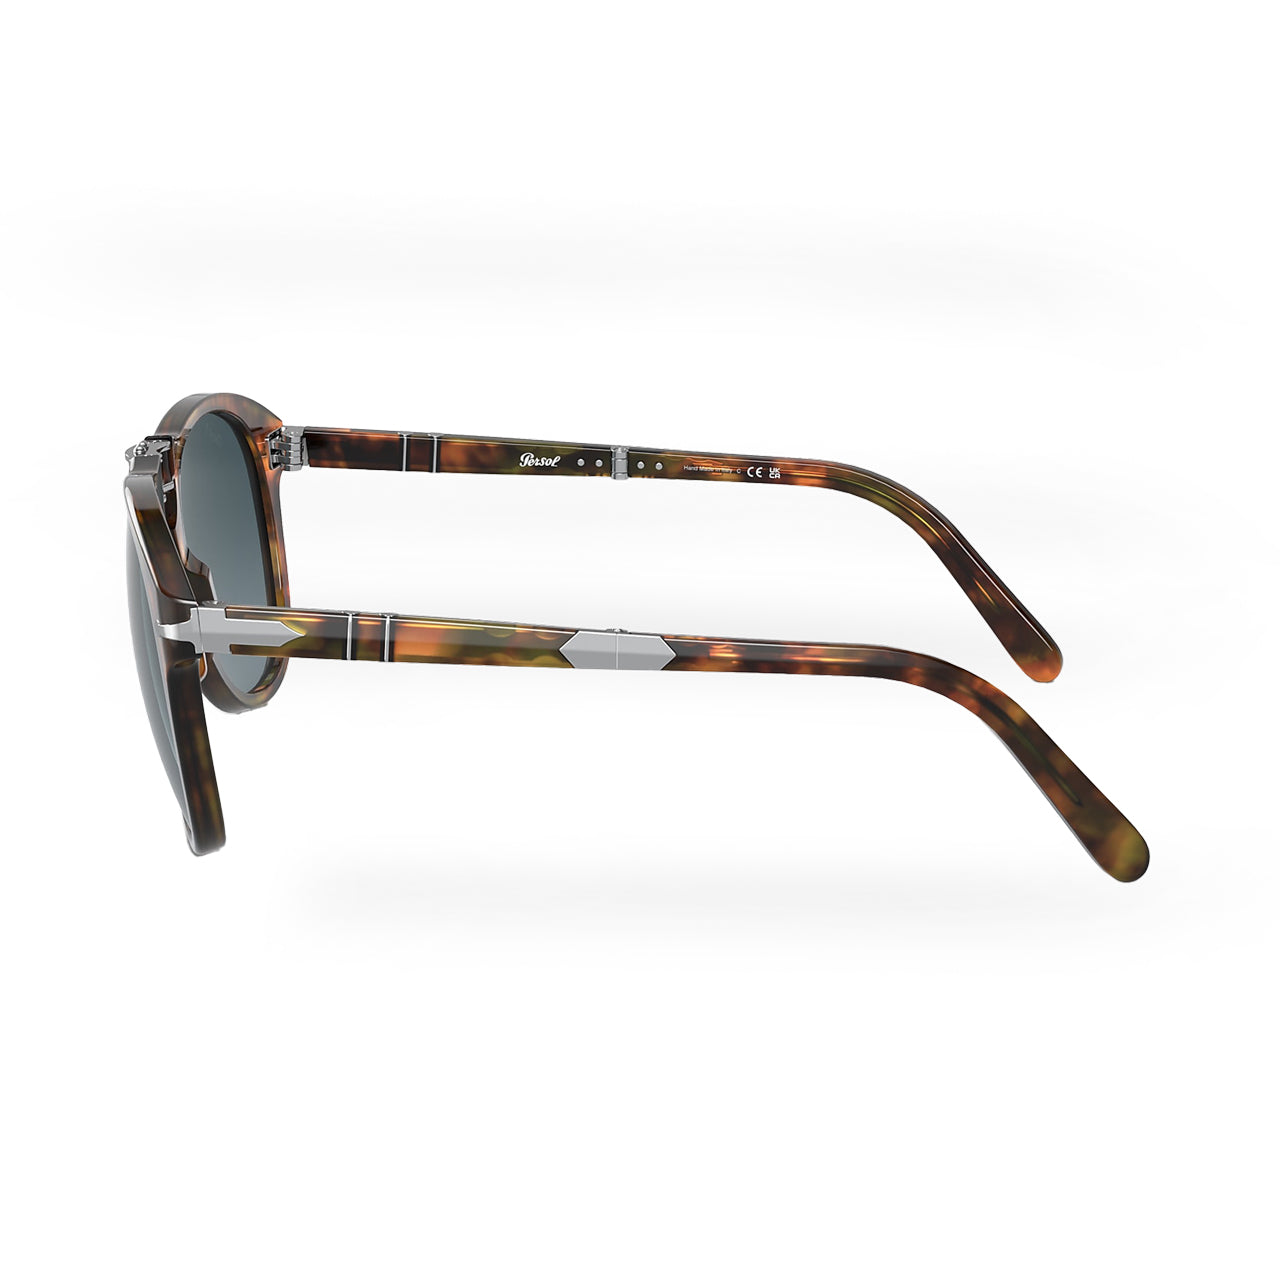 Persol Steve McQueen 714SM Caffe Sunglasses